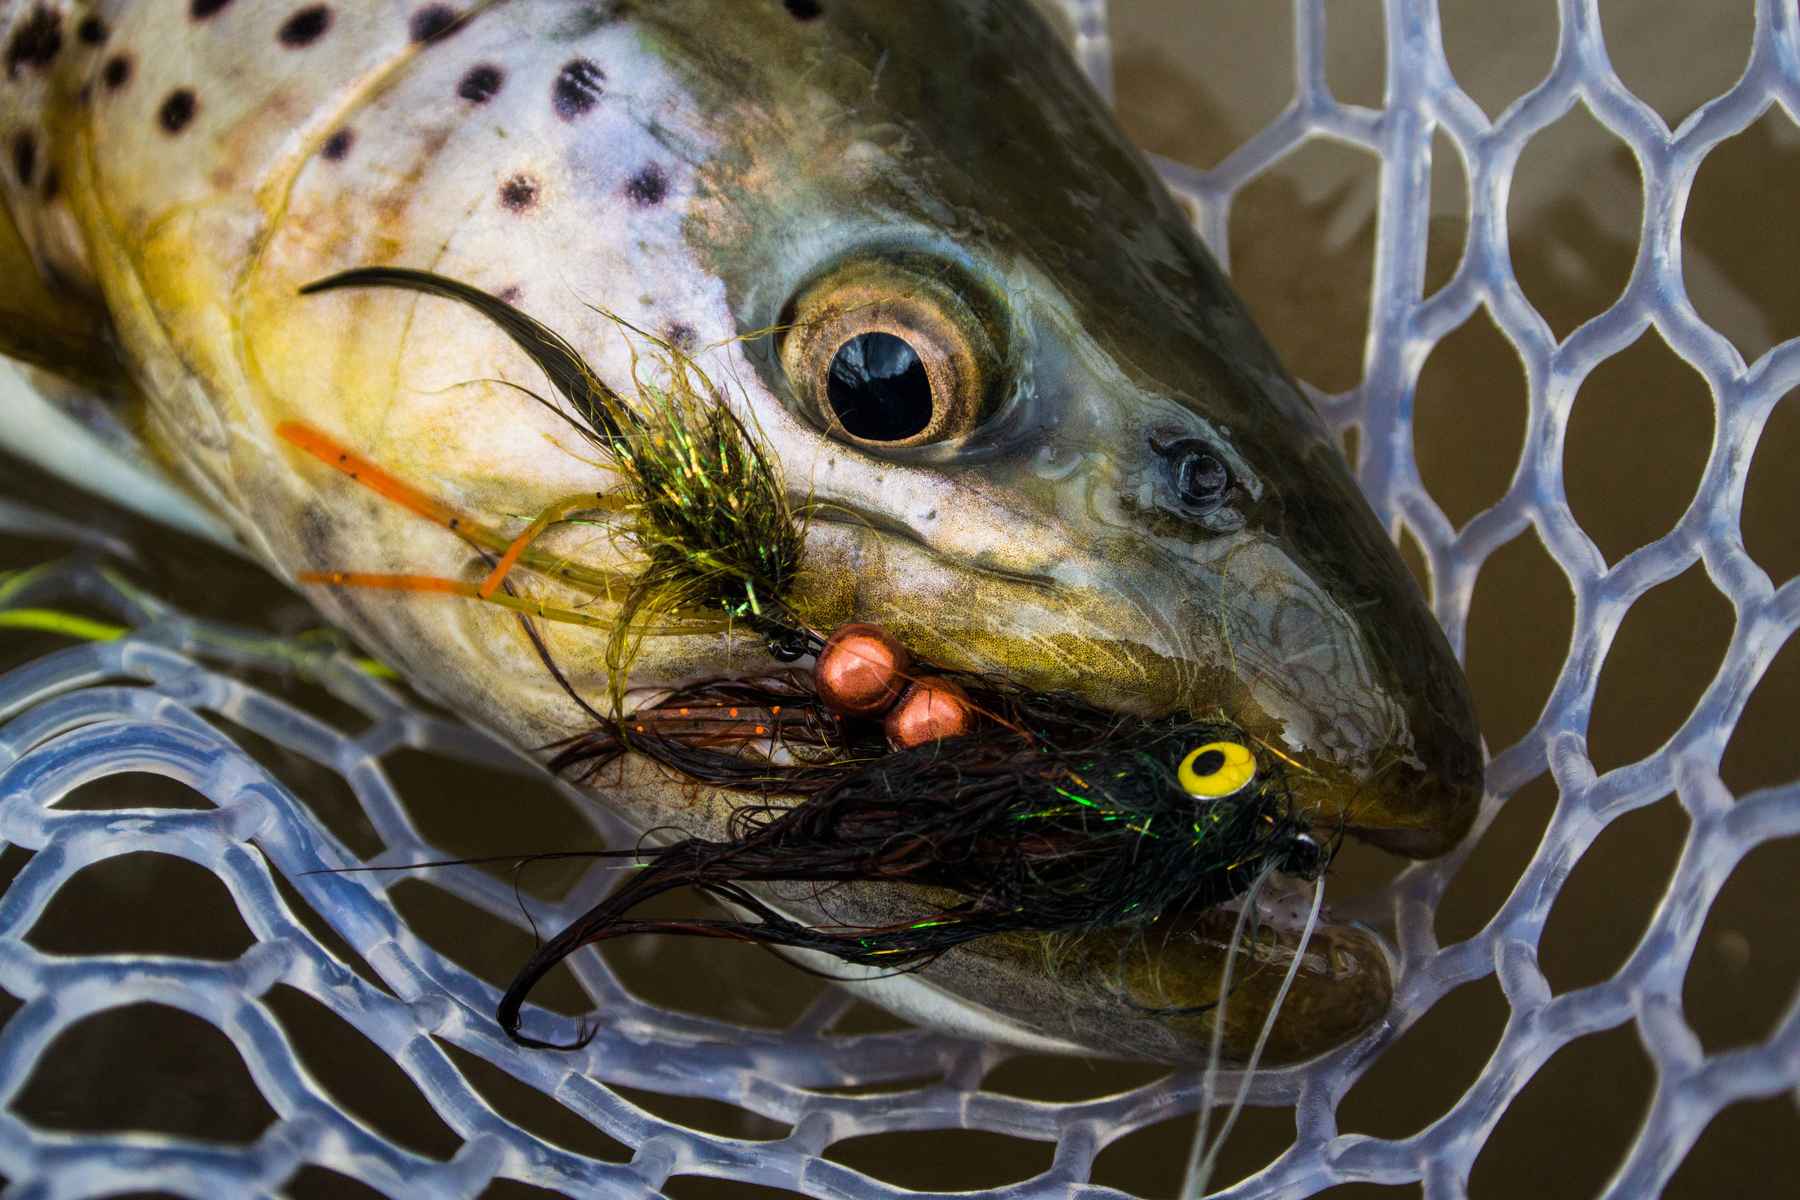 Slug zombies are the perfect spring streamer 🍖 #flyfishing  #streamerfishing #fishing #river #pescavida